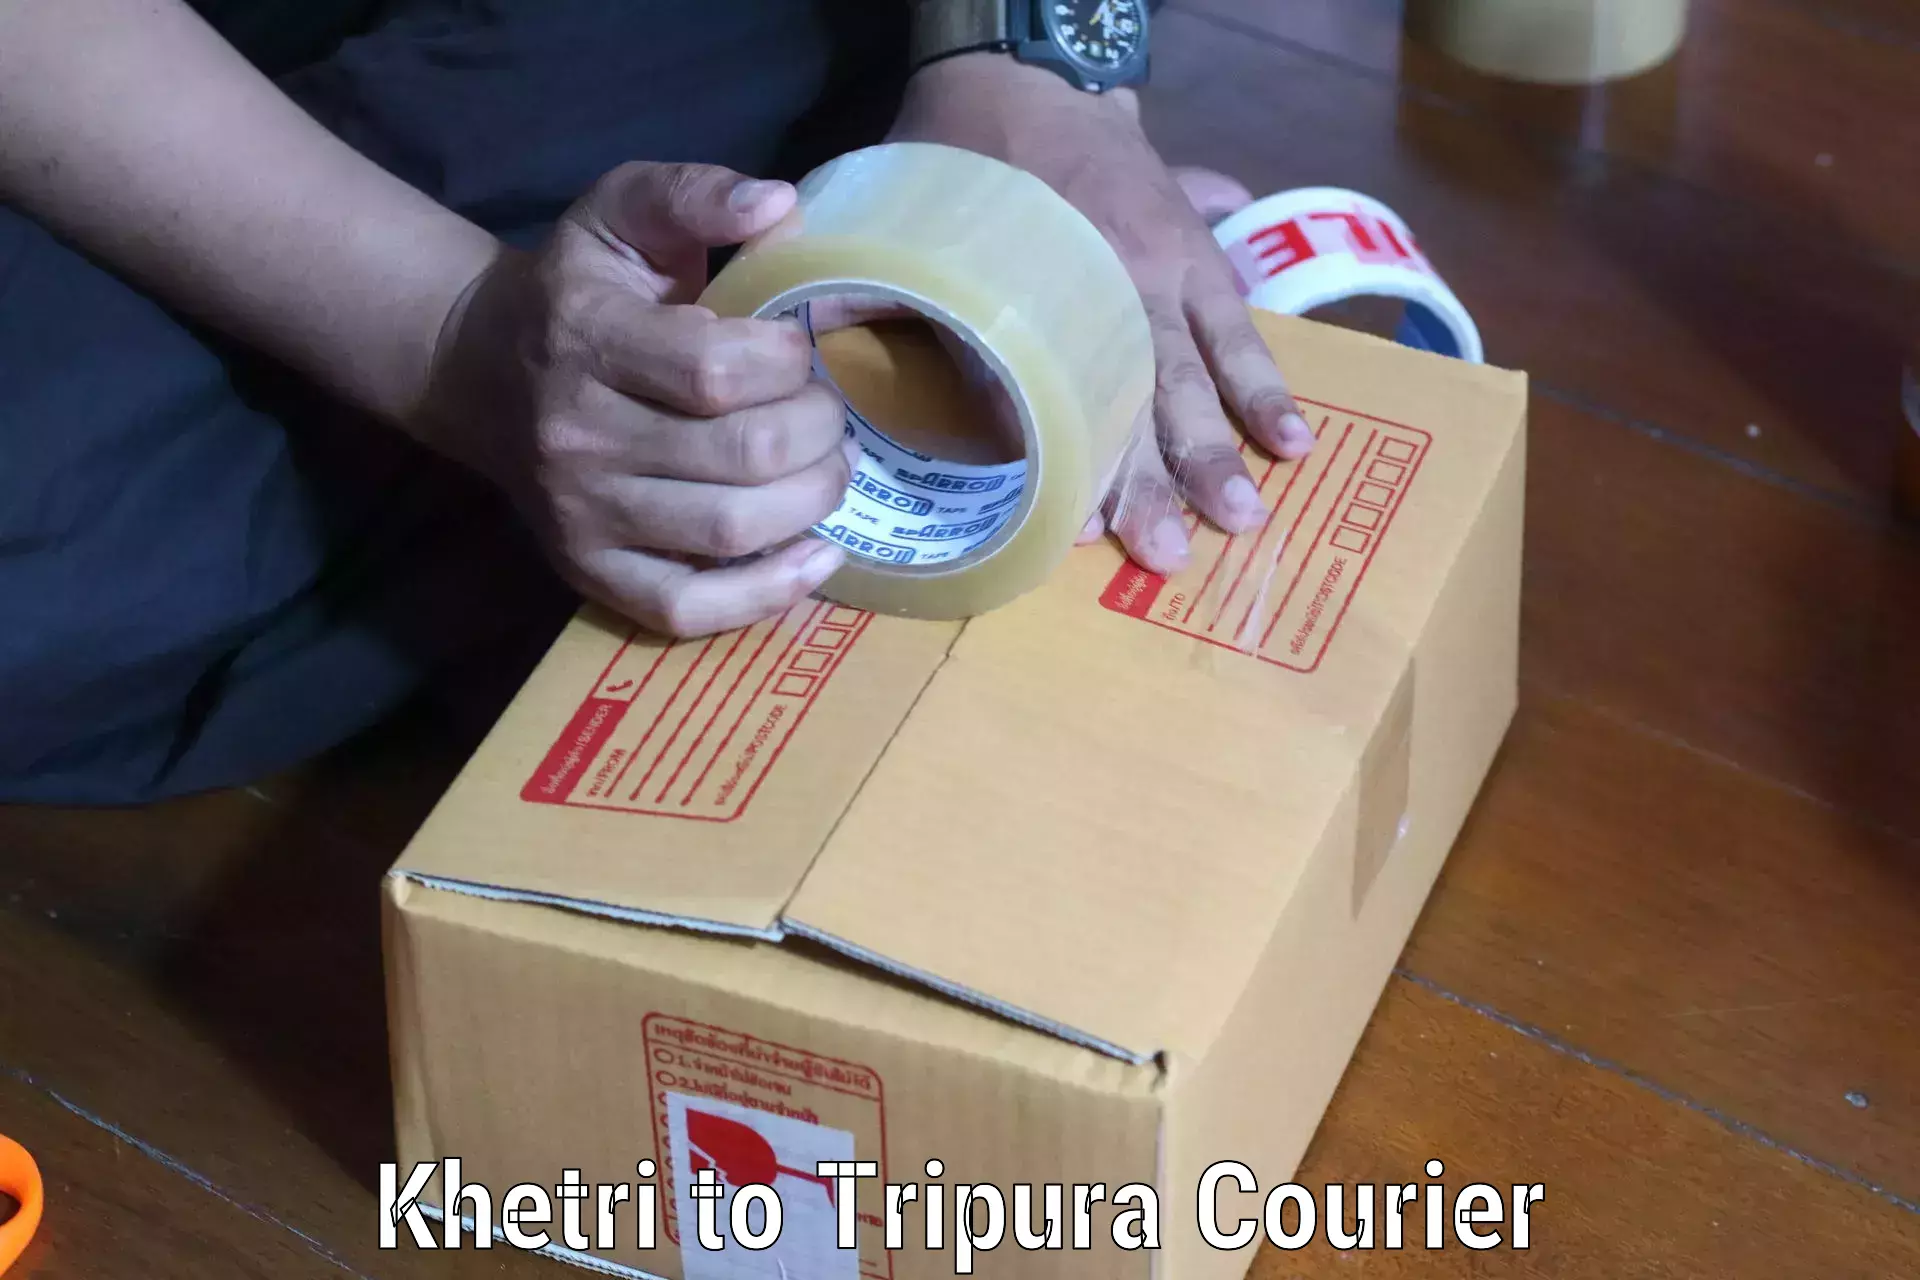 Courier service comparison Khetri to Udaipur Tripura